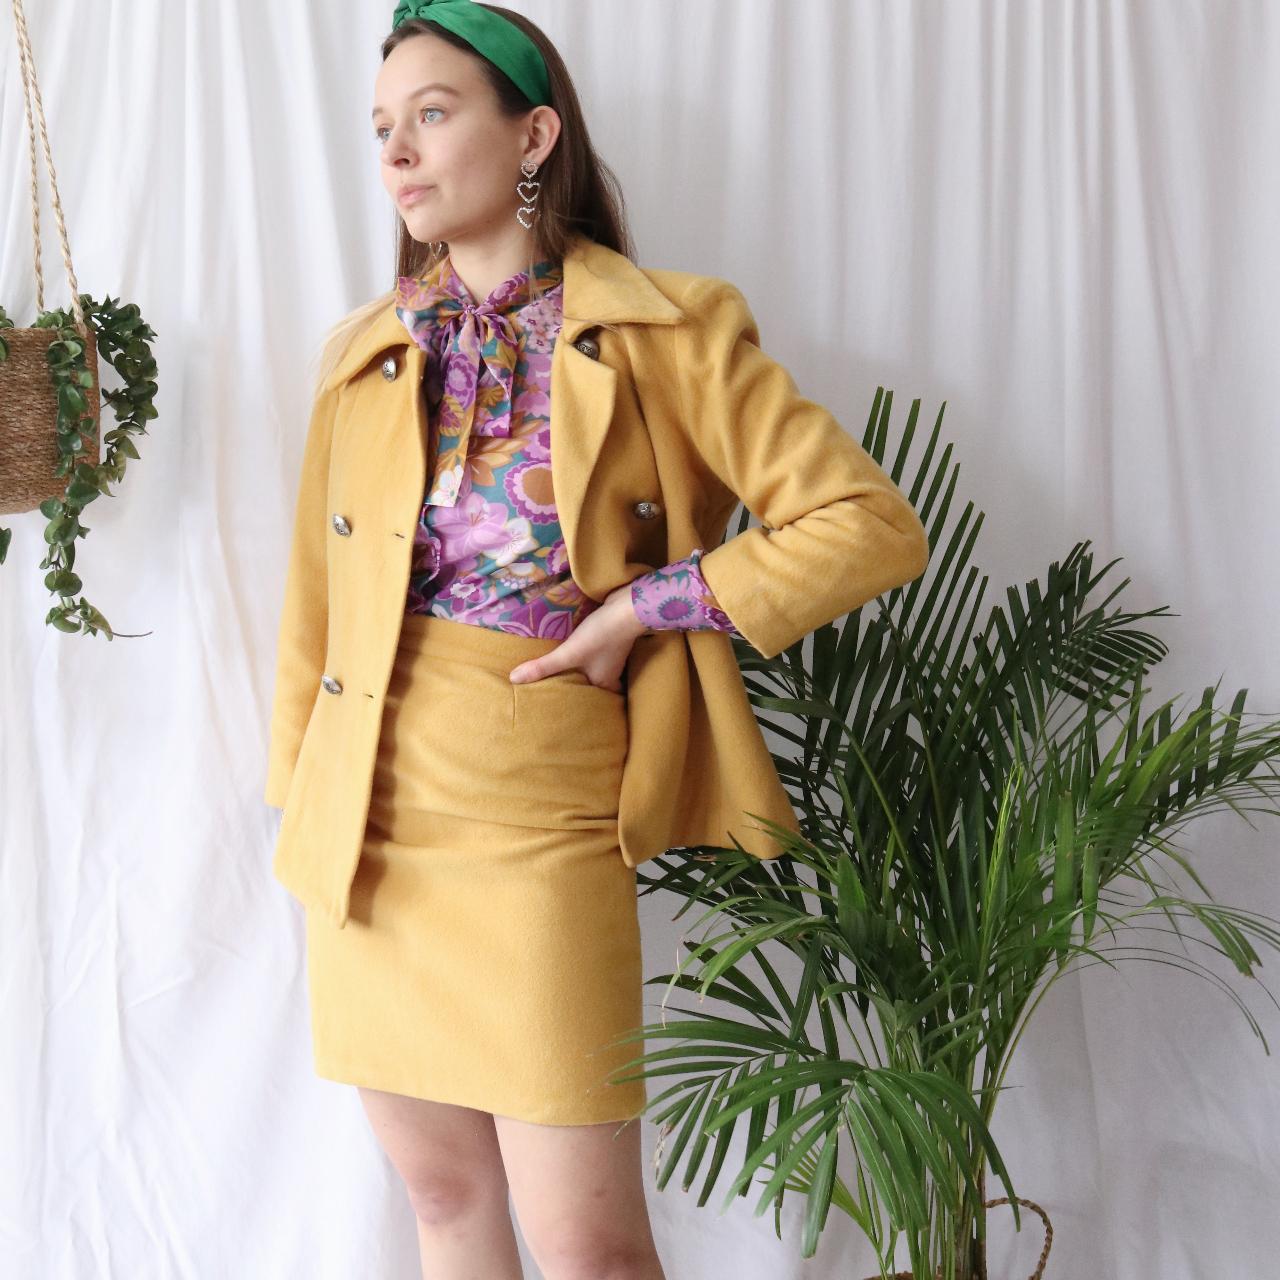 Vintage mustard yellow skirt suit 🌸 - size not... - Depop